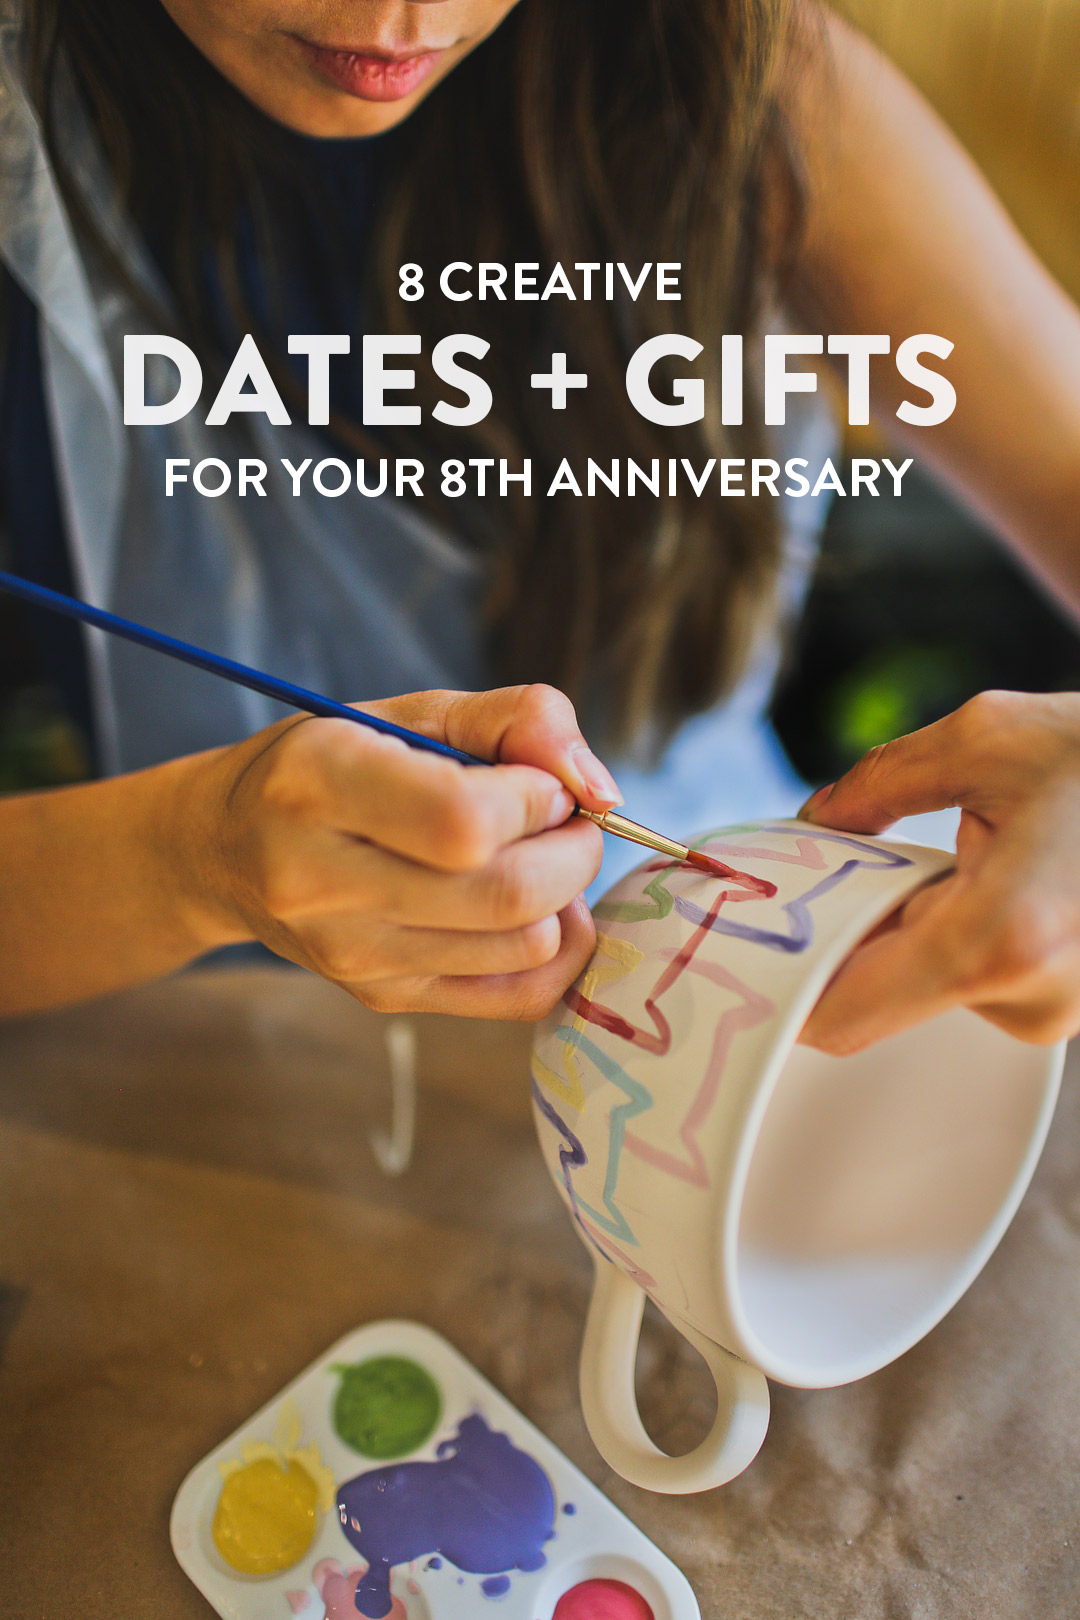 25th Wedding Anniversary Gift Ideas